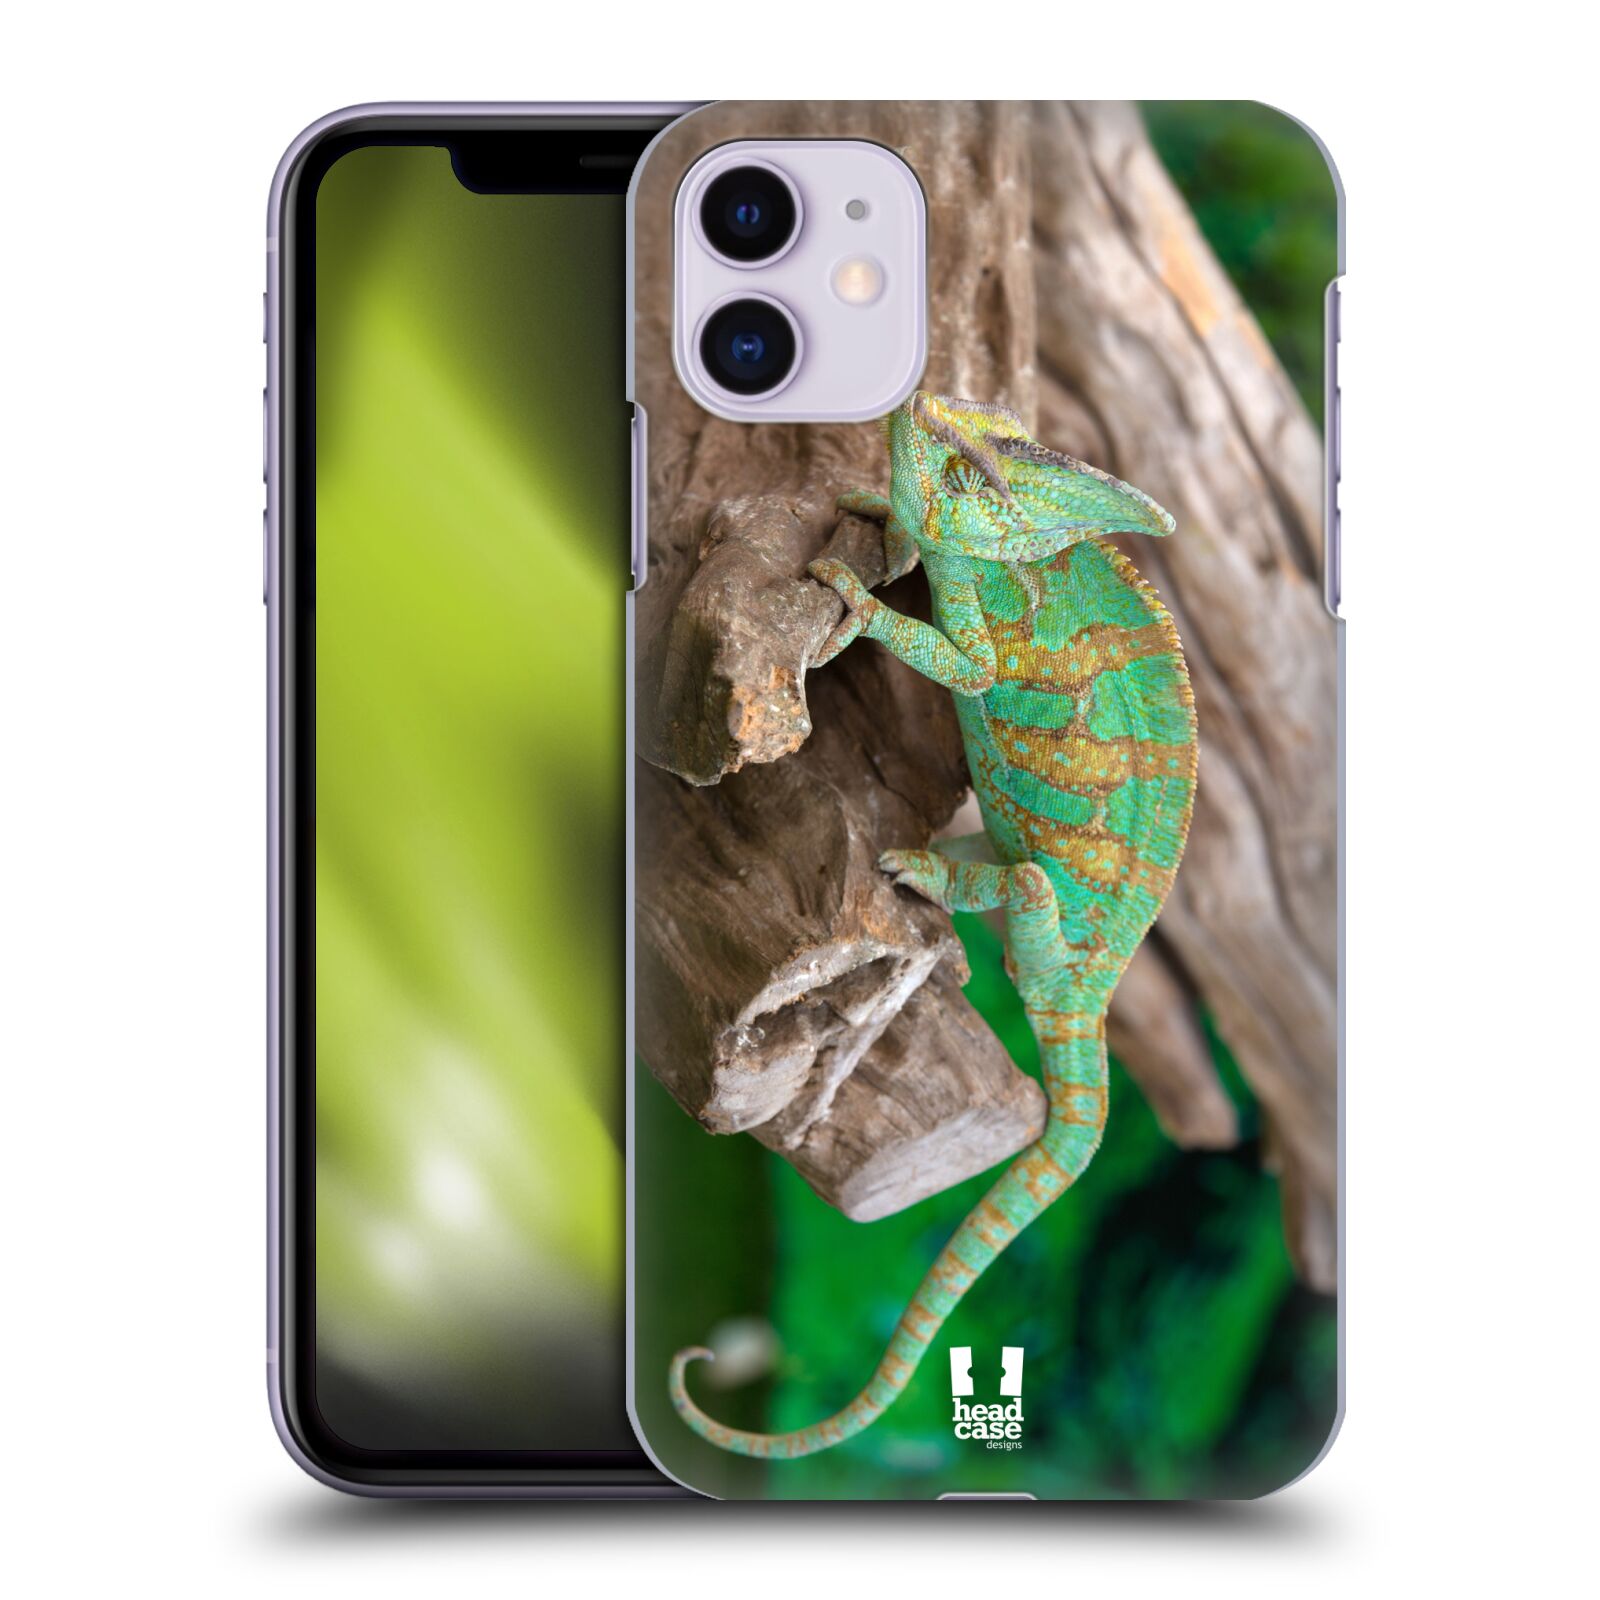 Pouzdro na mobil Apple Iphone 11 - HEAD CASE - vzor slavná zvířata foto chameleon